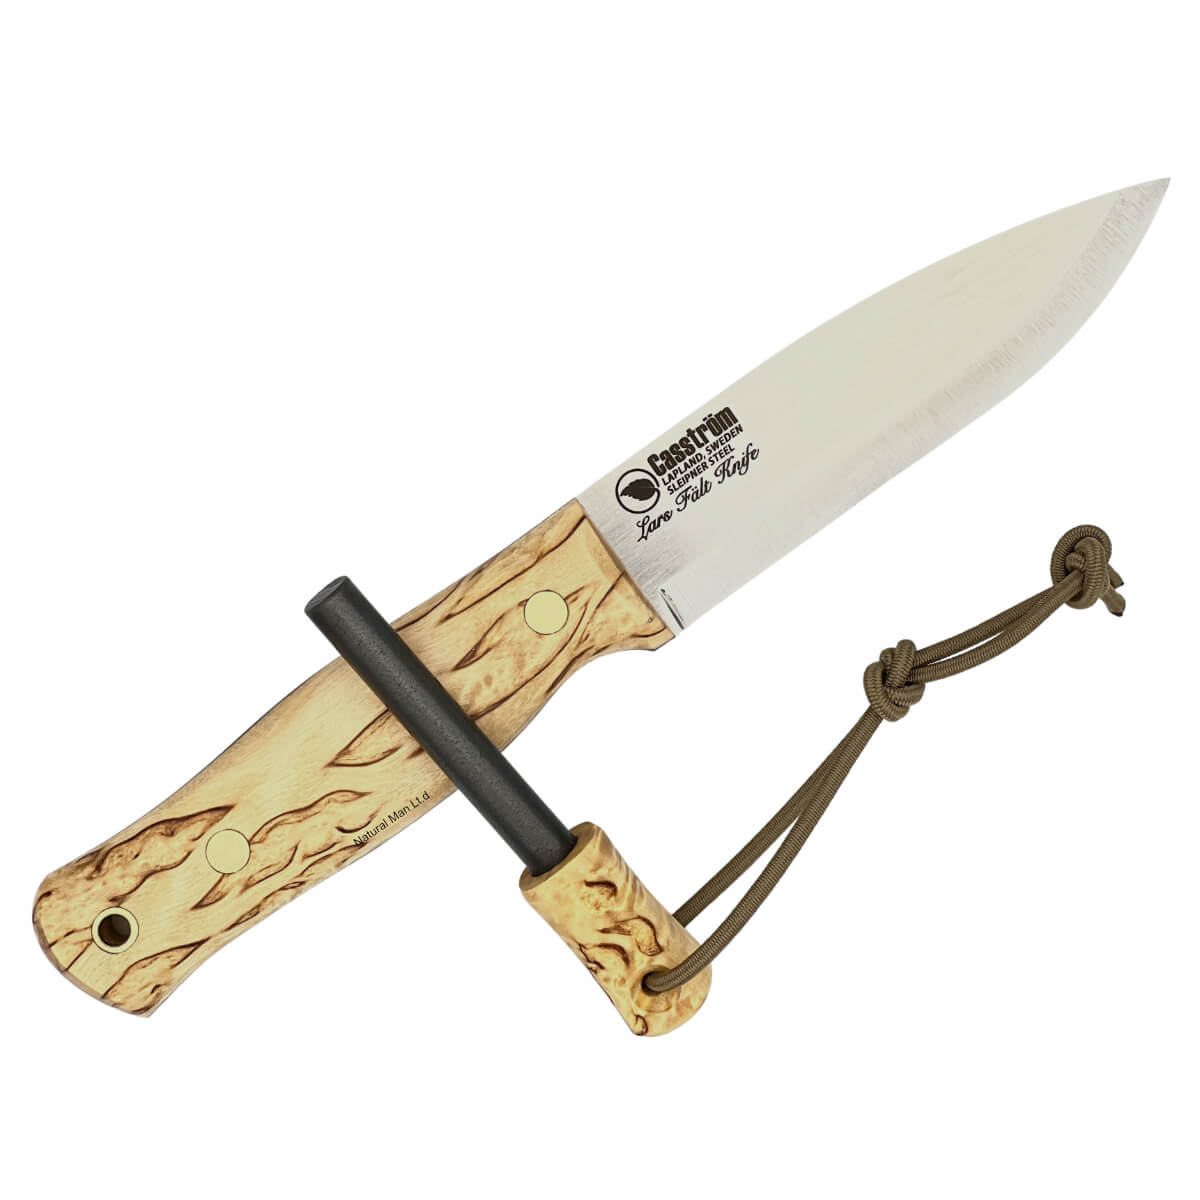 Casstrom Lars Falt Bushcraft Knife and ferro rod